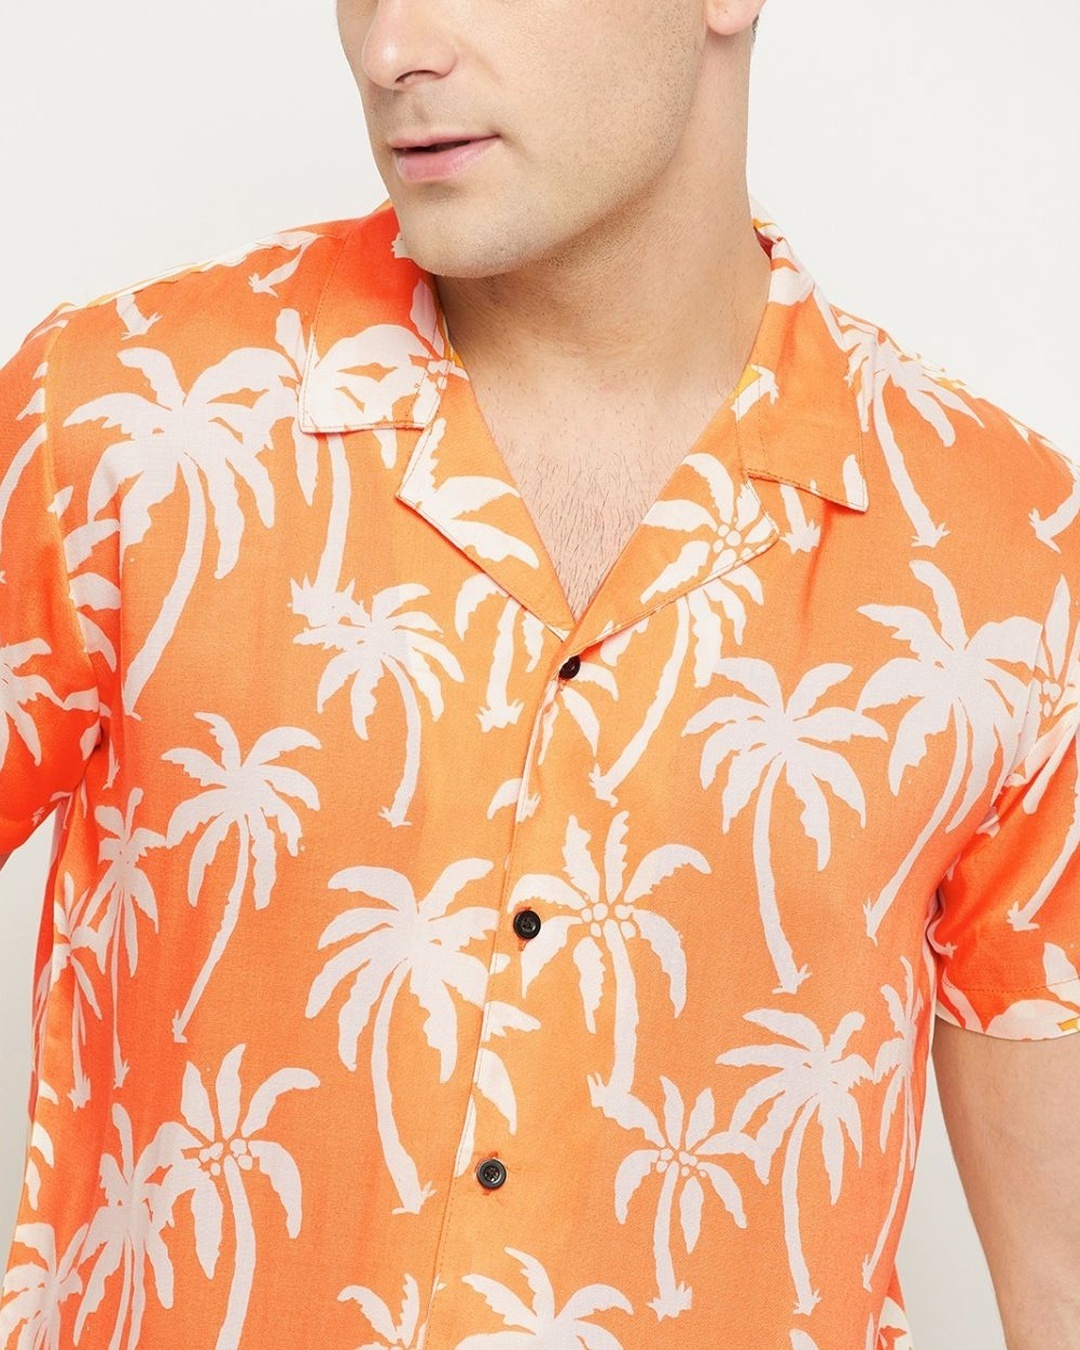 Shop Men's Orange All Over Palm Trees Printed Shirt